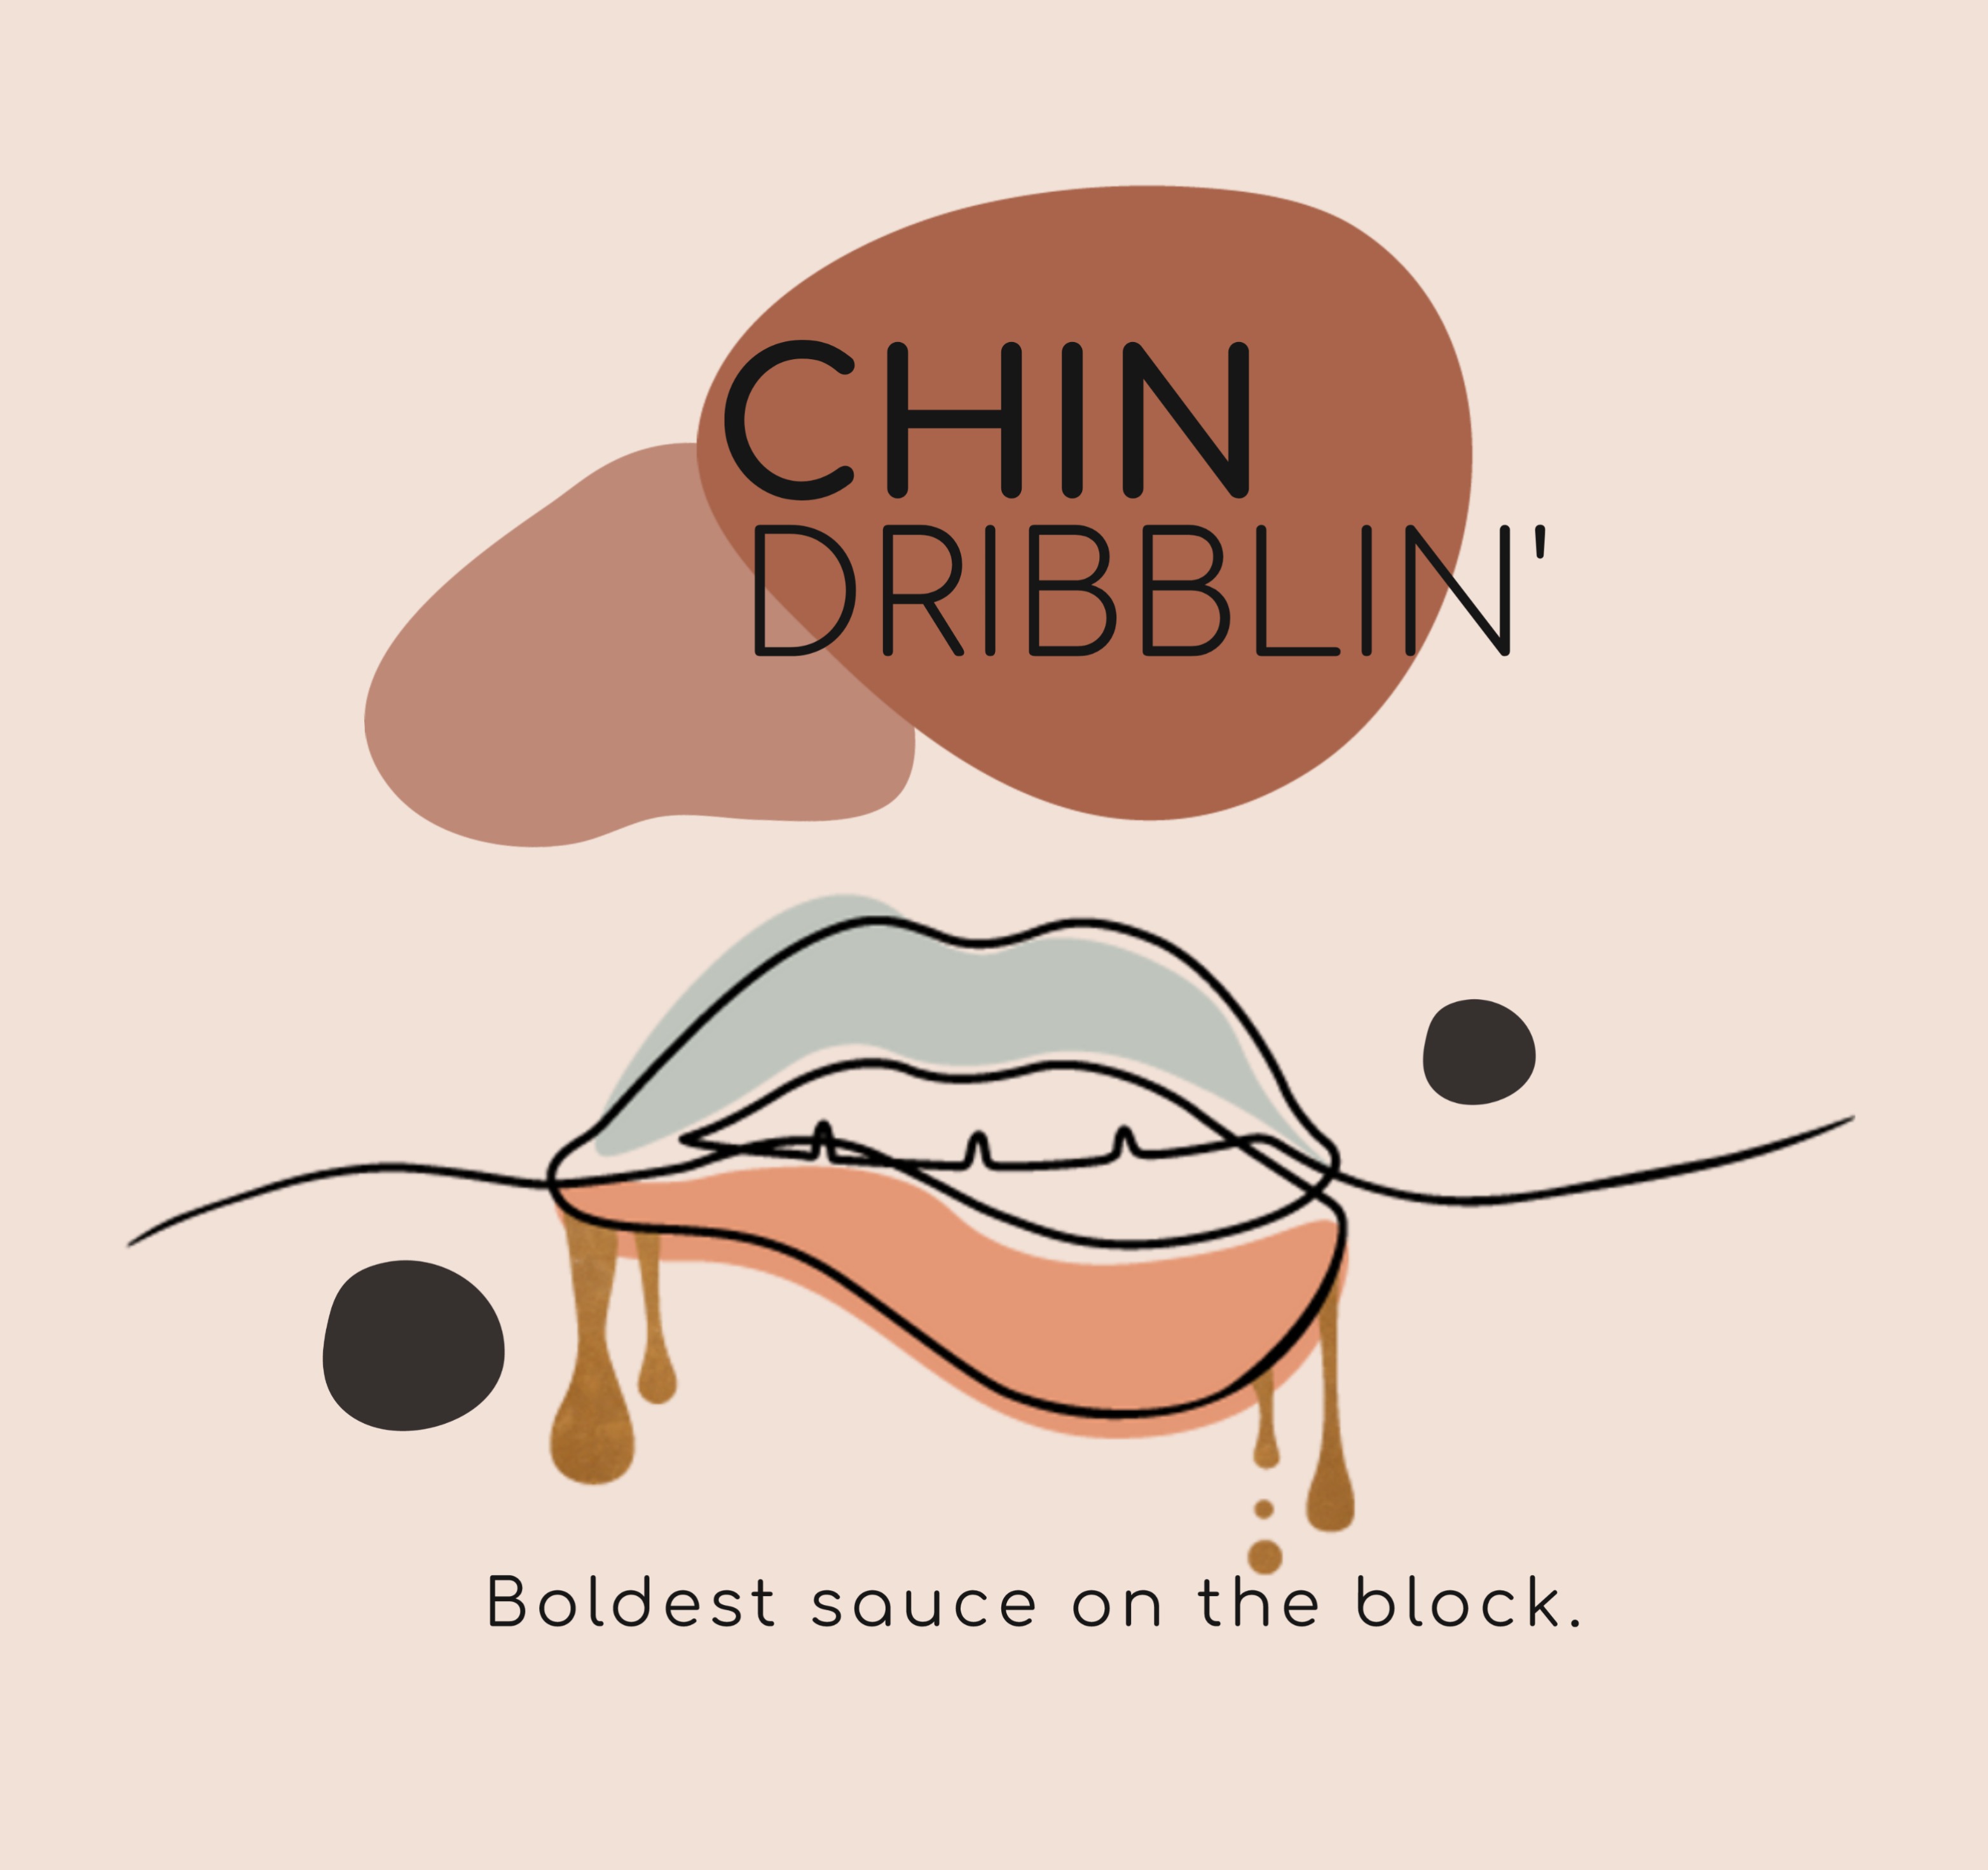 Chin Dribblin’